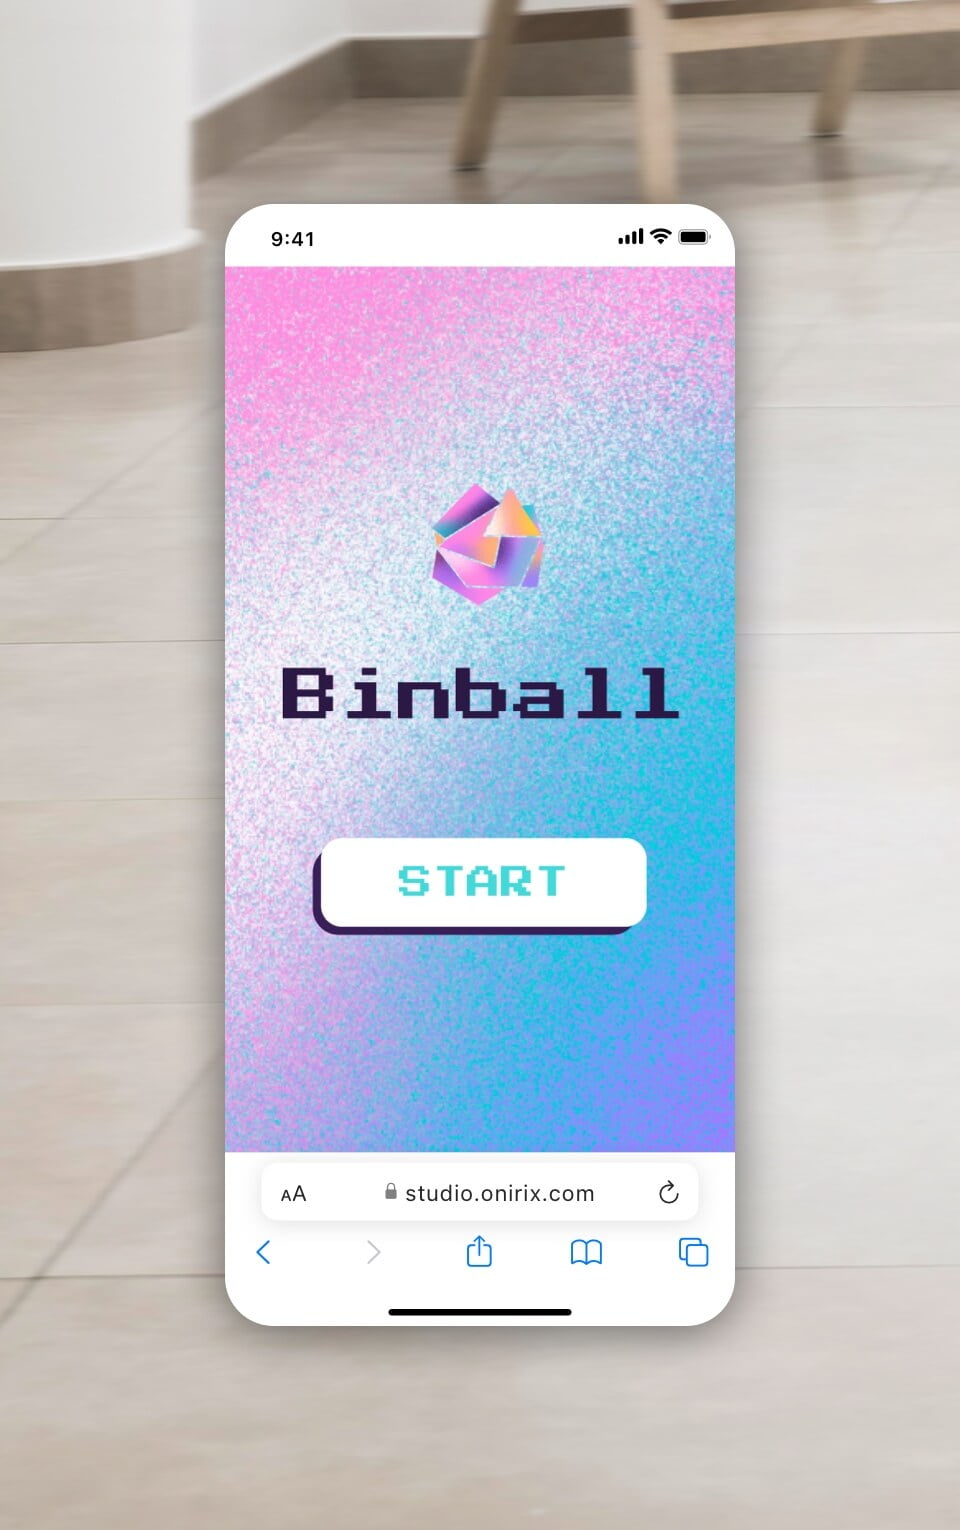 Binball_feat 1